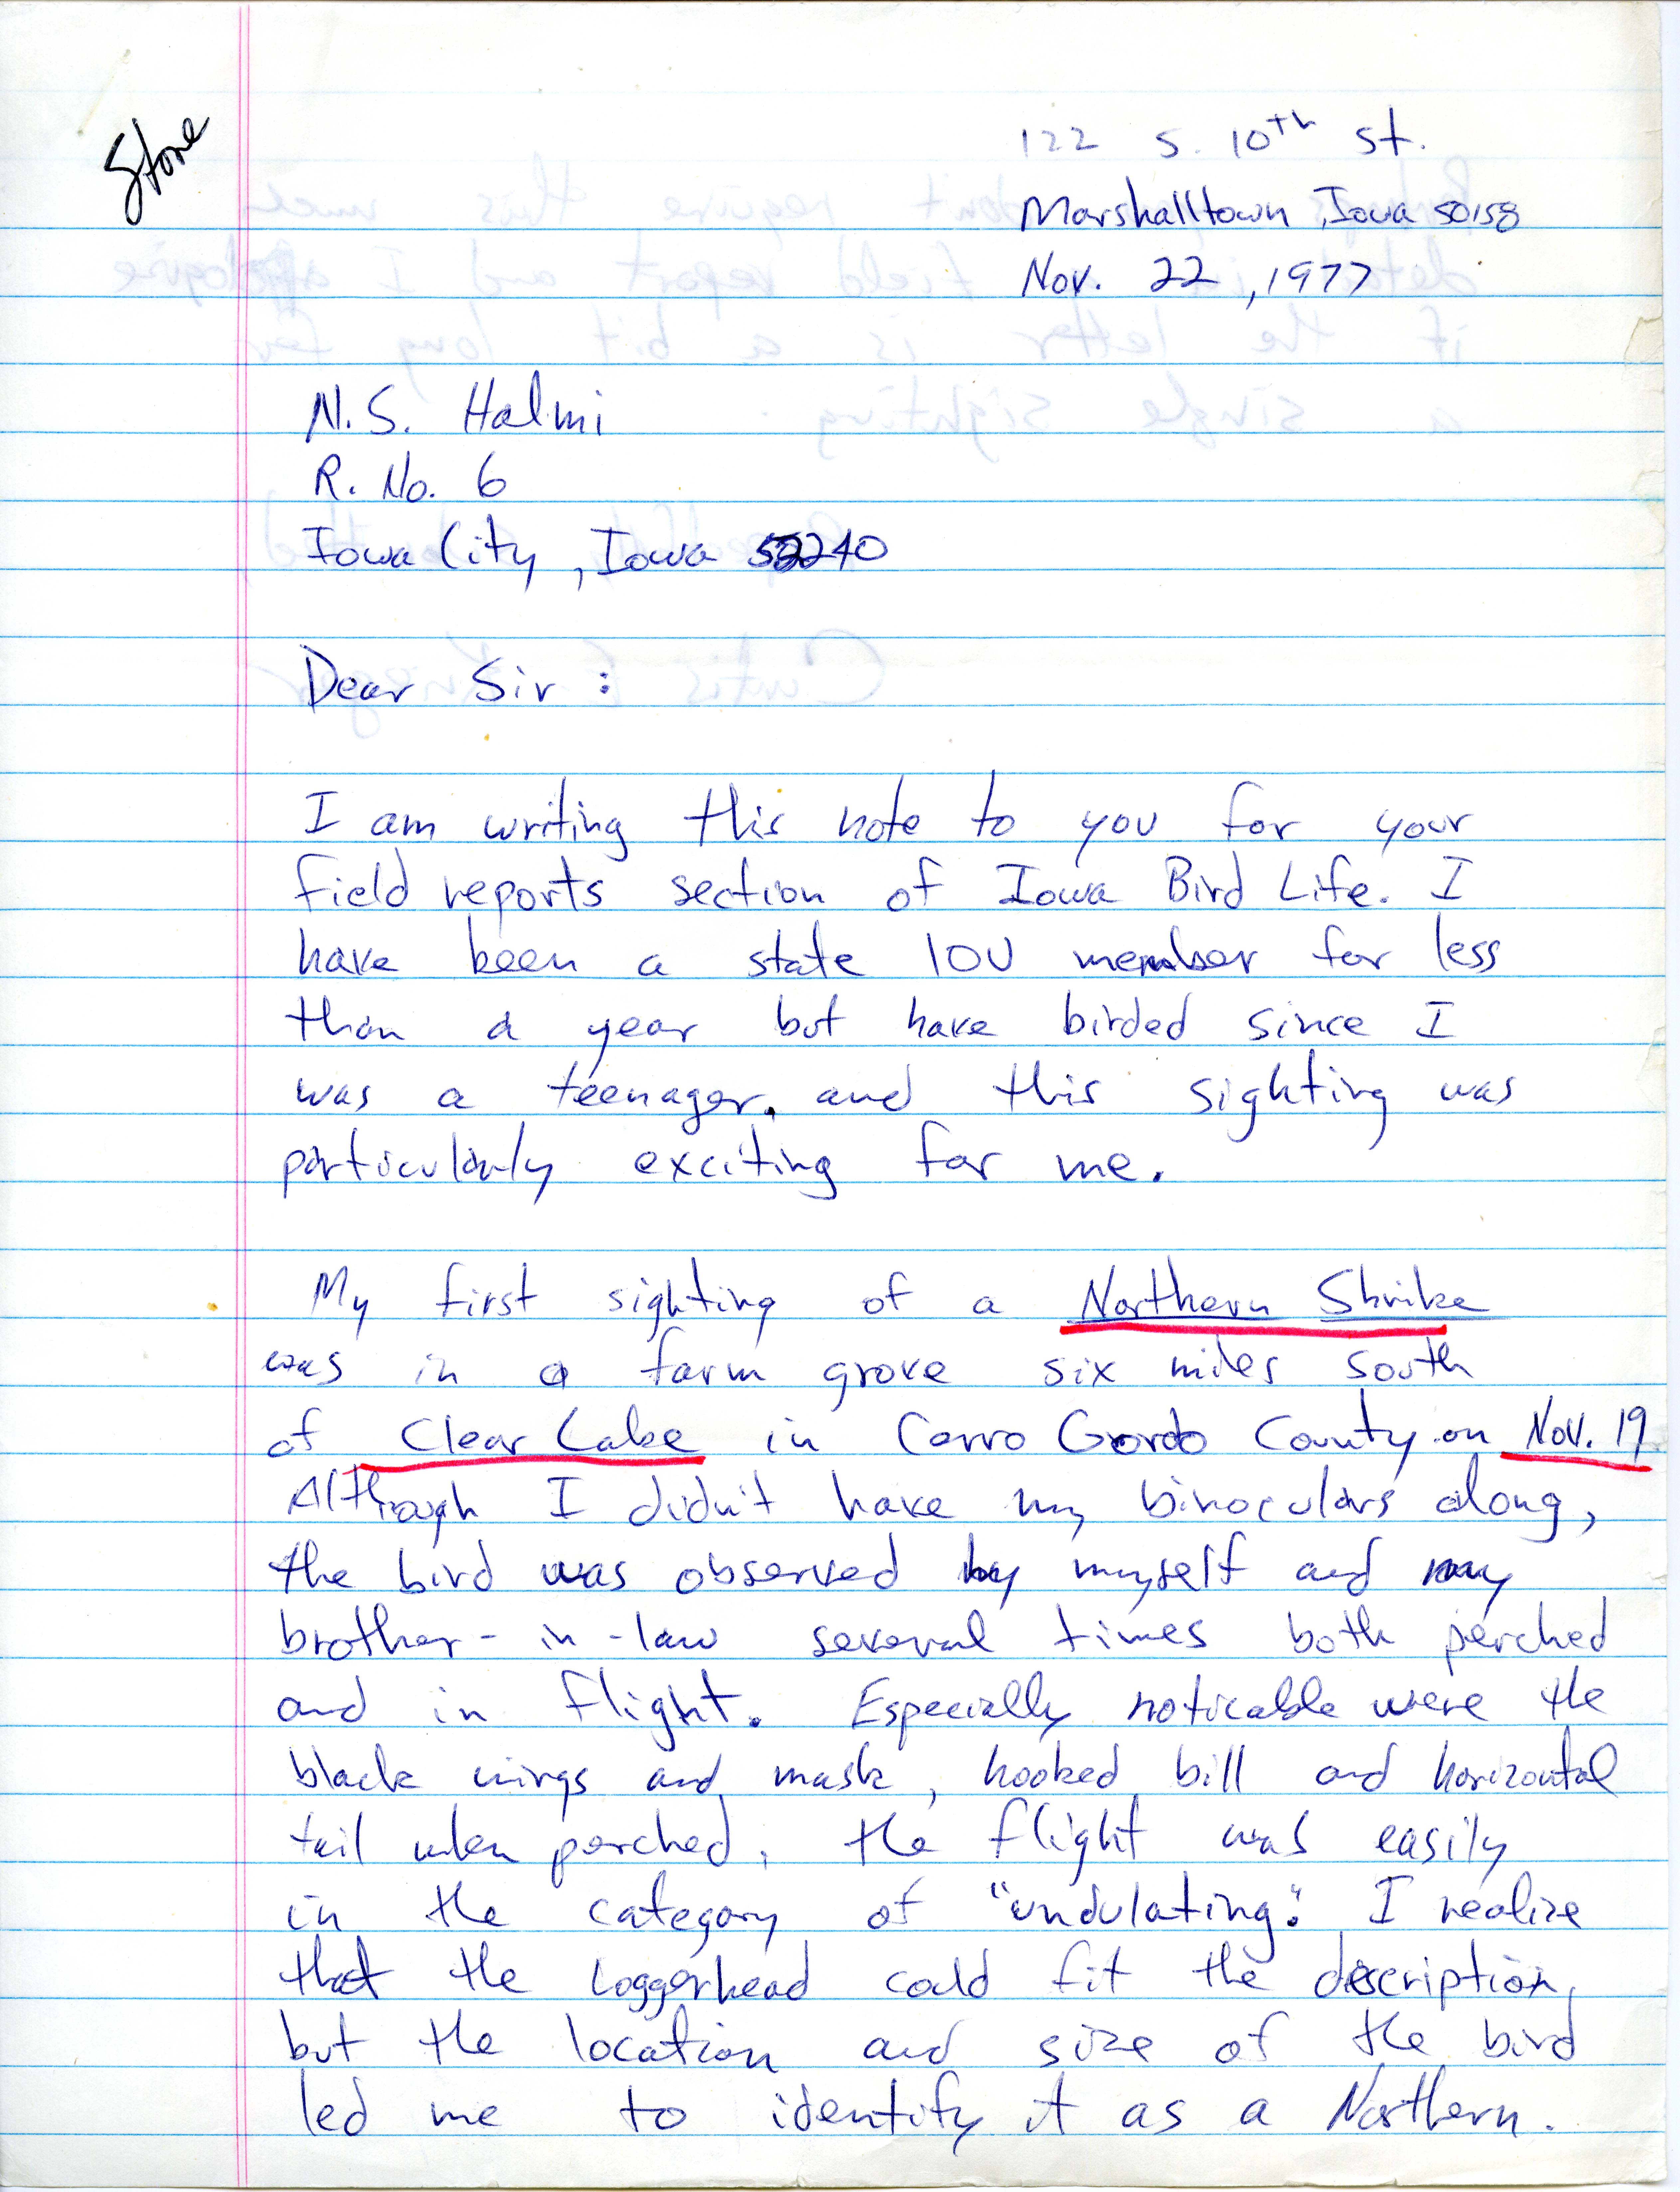 Curtis E. Krieger letter to Nicholas S. Halmi regarding his sighting of a Northern Shrike, November 22, 1977